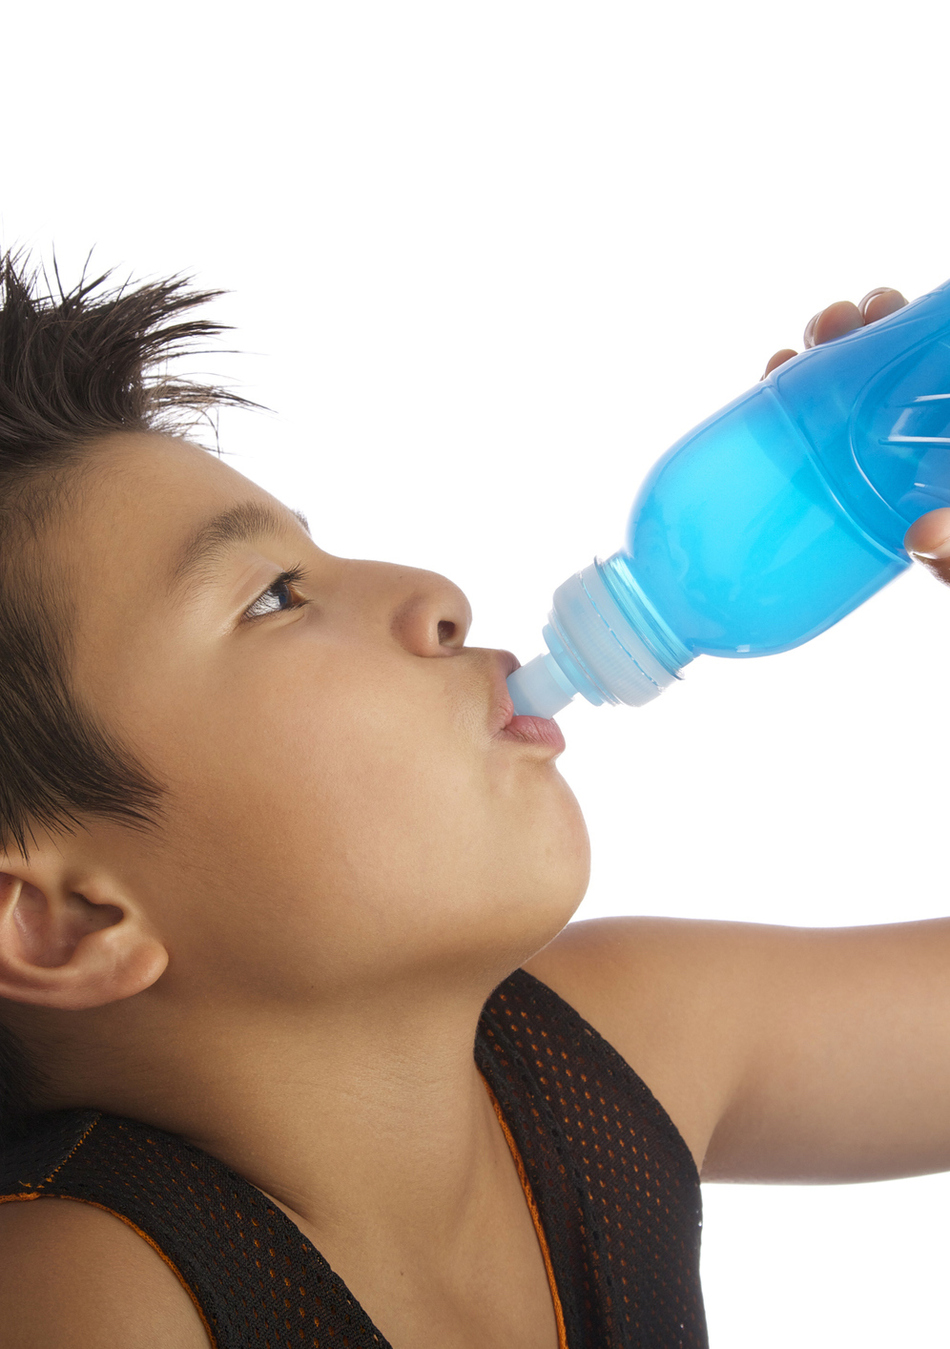 Sports Drinks or Energy Drinks for Children?